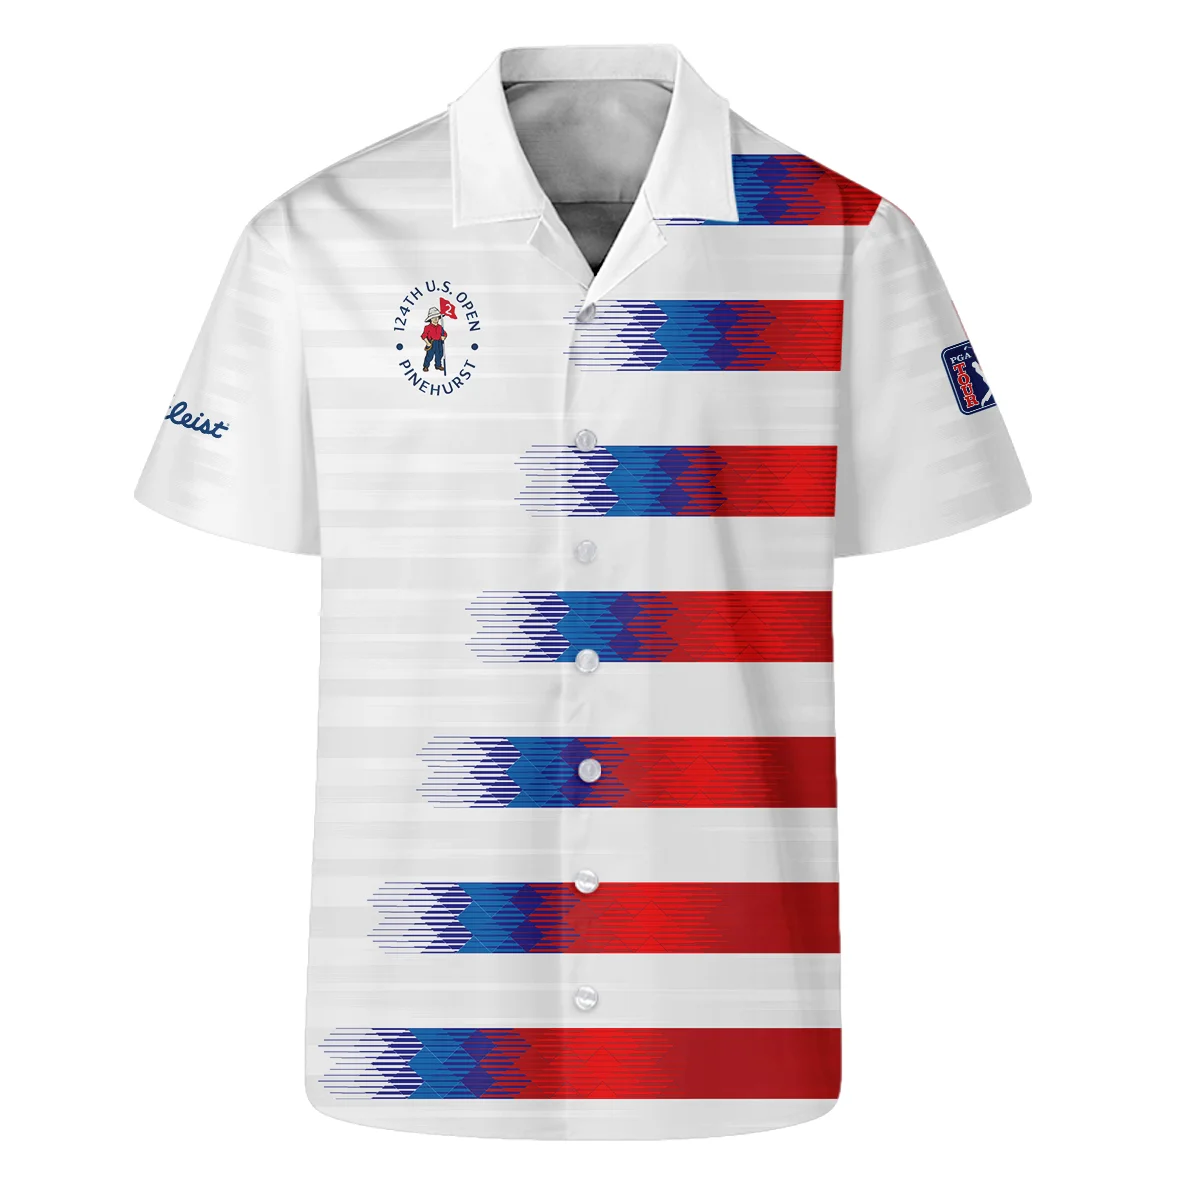 Titleist 124th U.S. Open Pinehurst Golf Sport Polo Shirt Blue Red White Abstract All Over Print Polo Shirt For Men